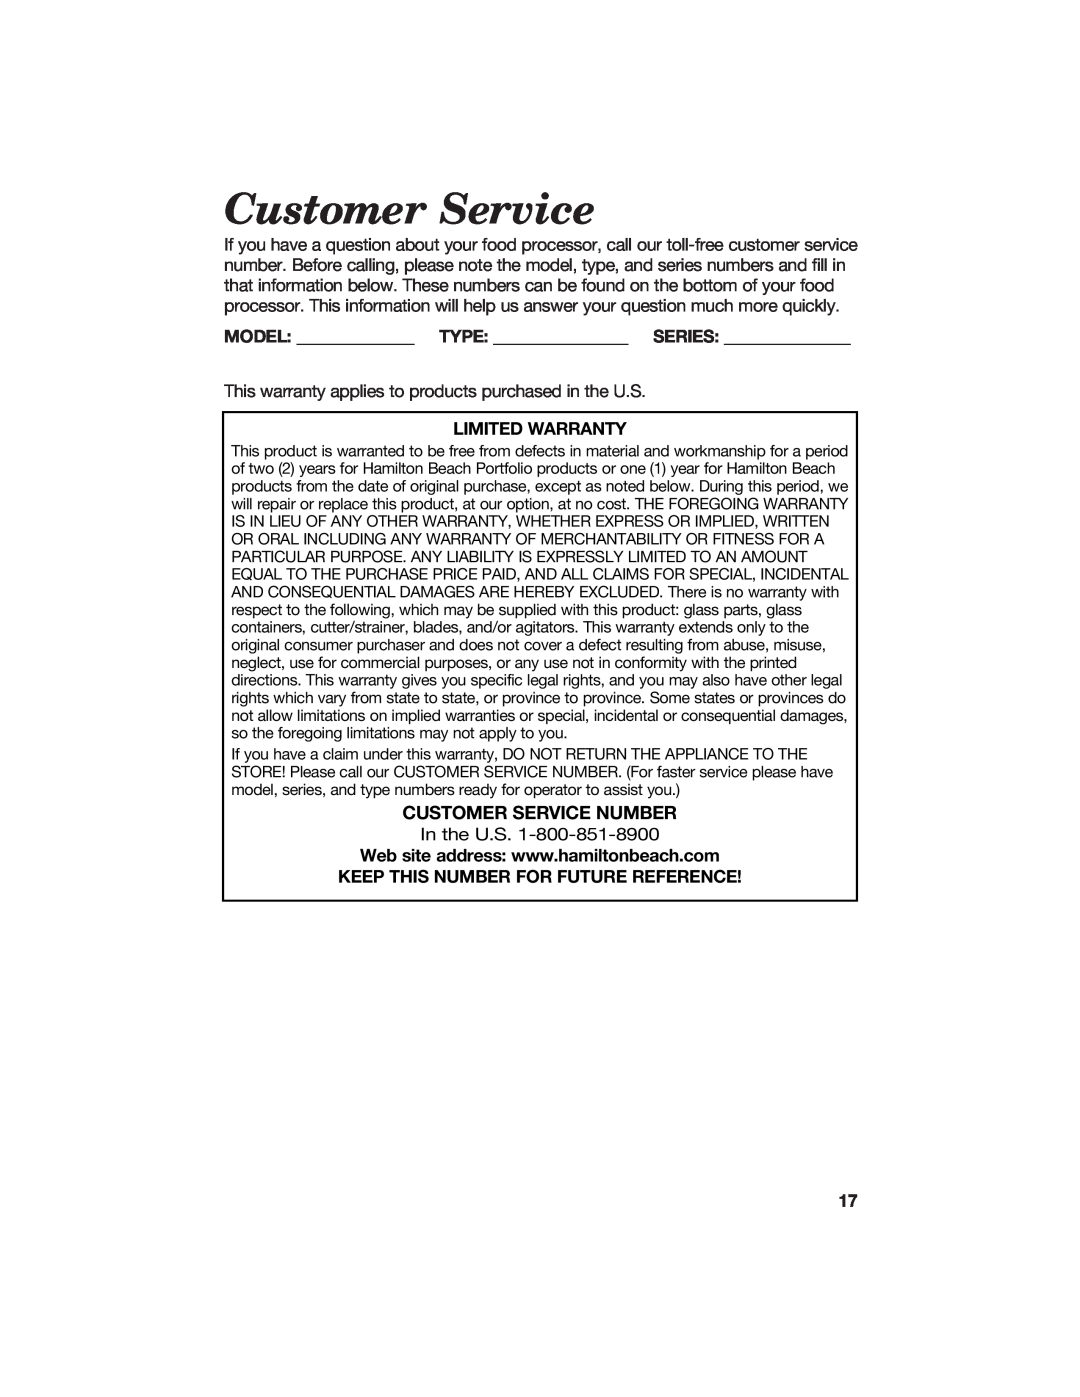 Hamilton Beach 840118100 manual Customer Service Number 